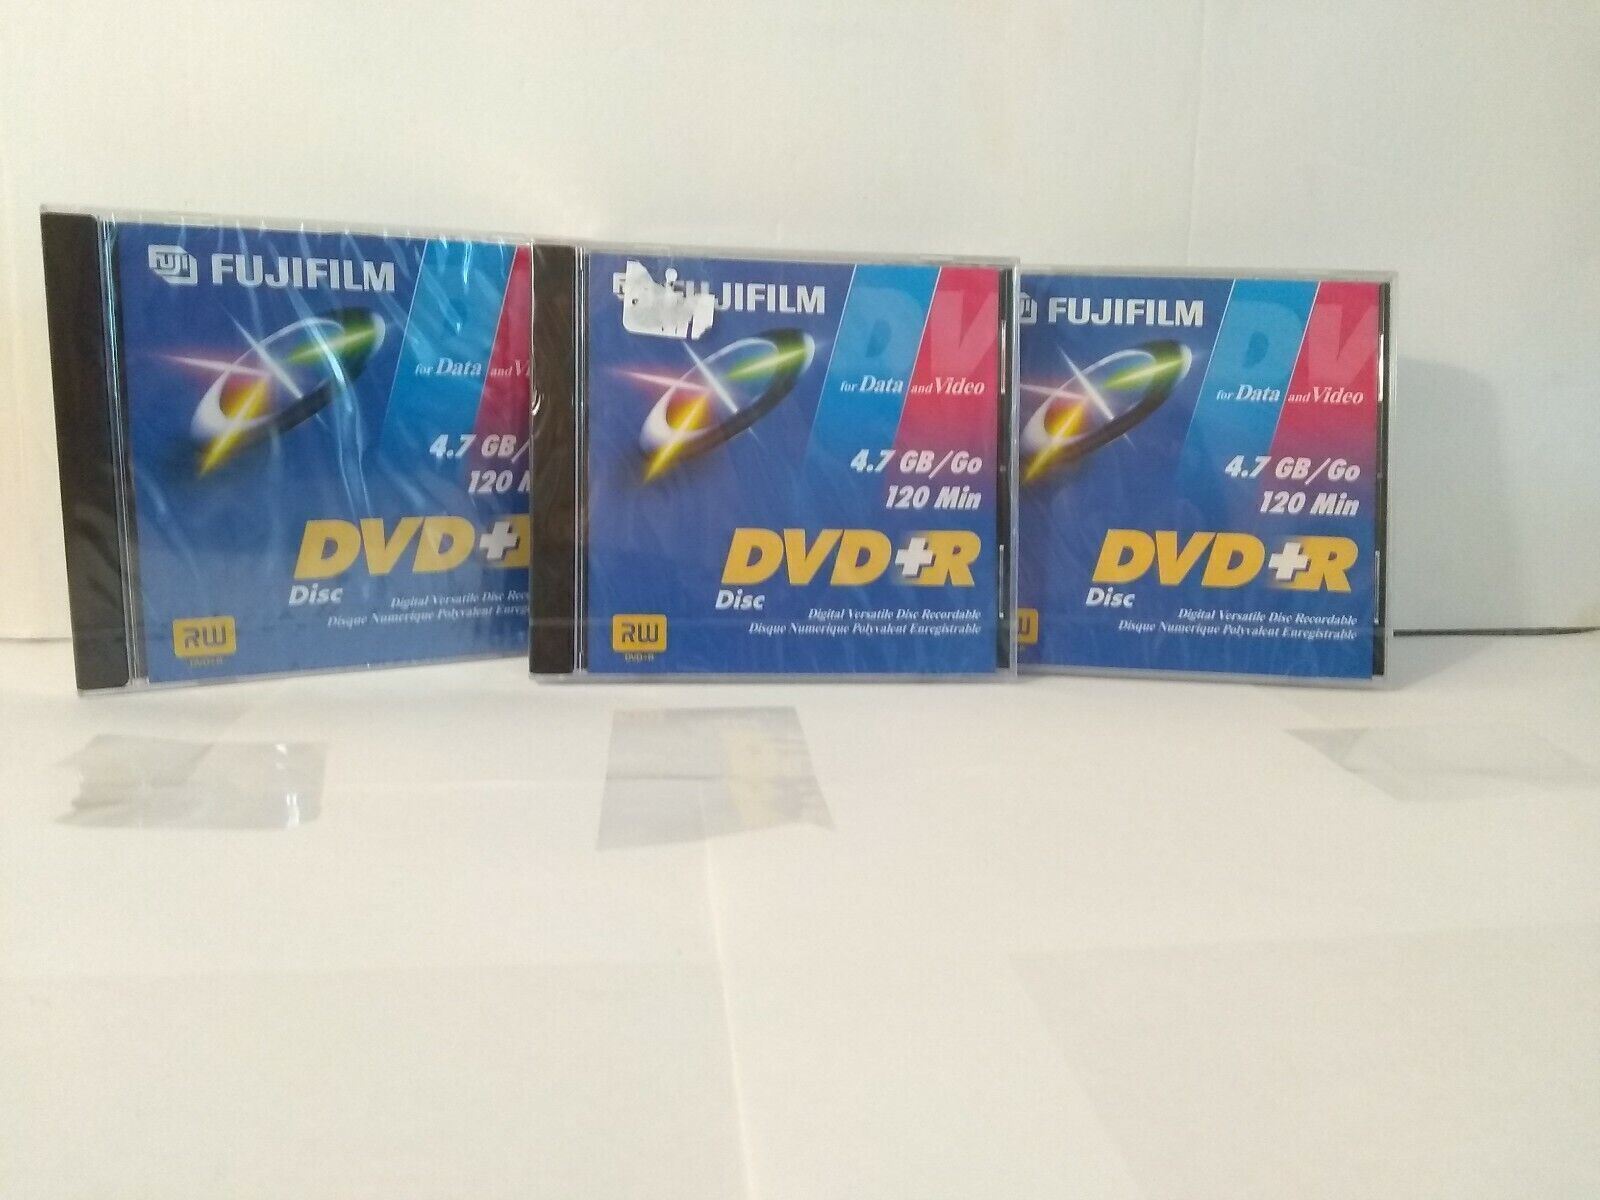 QTY 3 Fujifilm DVD+R 4.7 GB 3 Brand NEW Discs in Jewel Cases FREE FAST Shipping